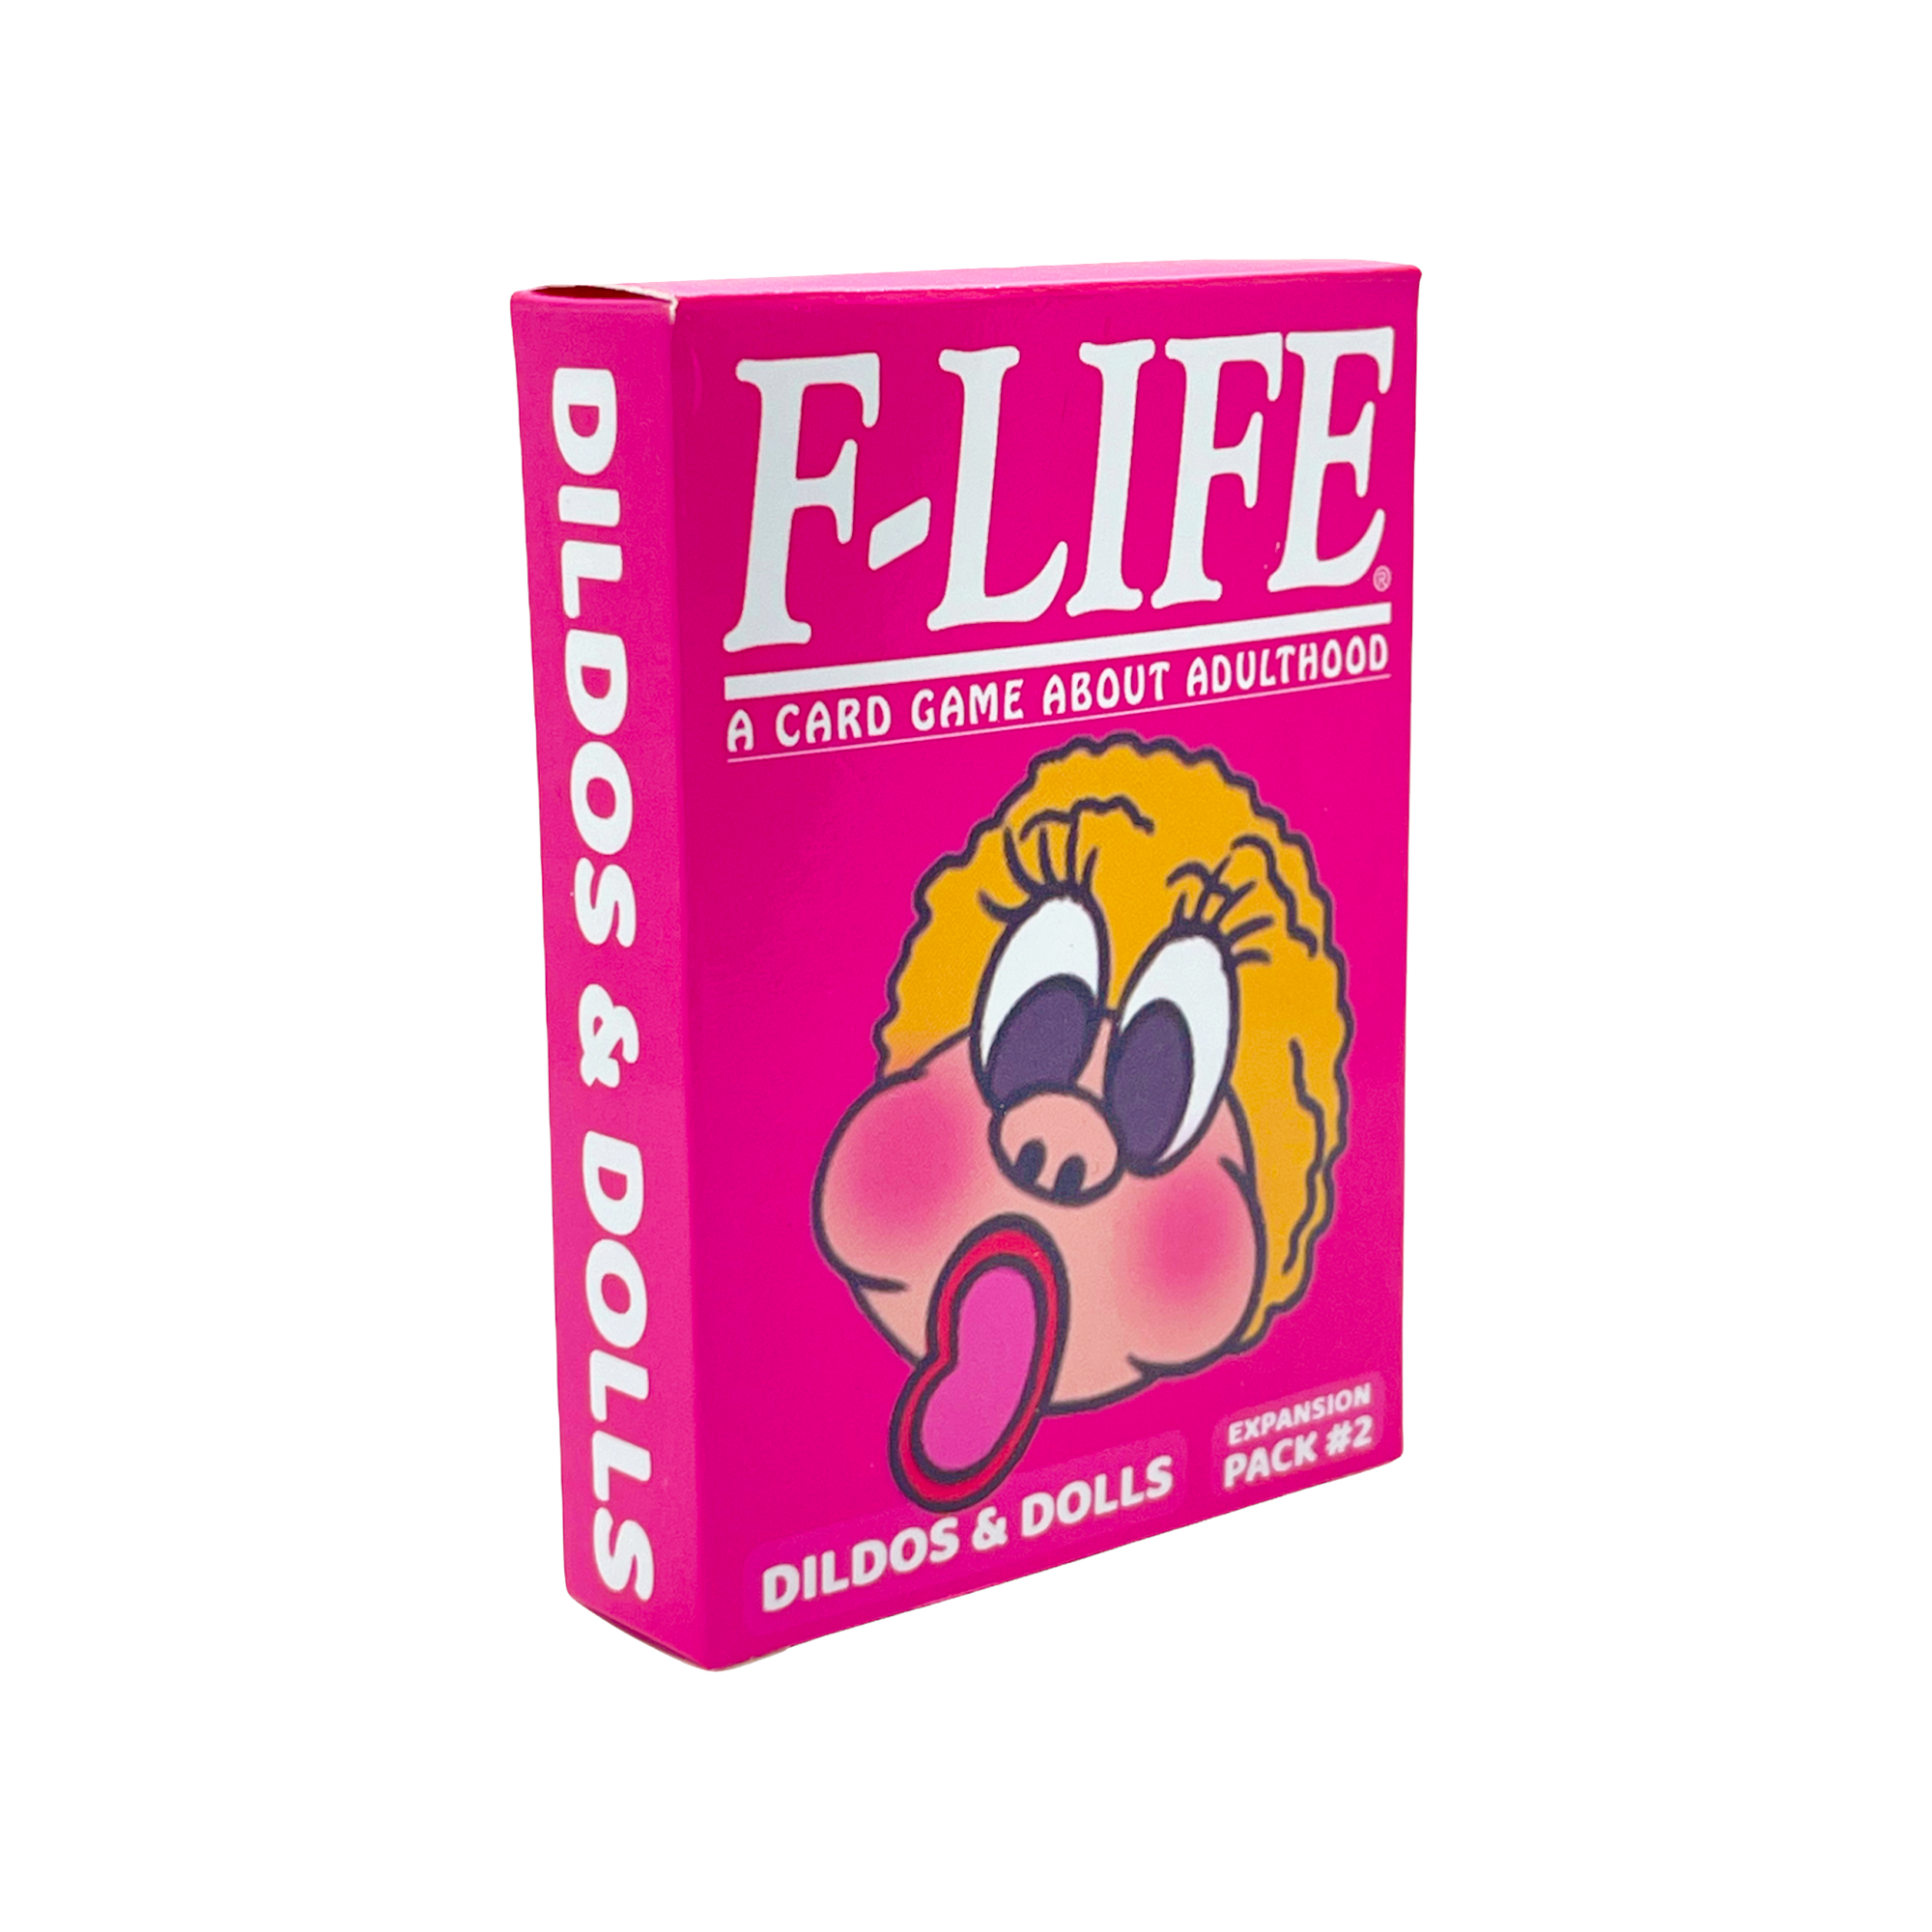 F-Life: Dildos & Dolls Expansion Pack #2